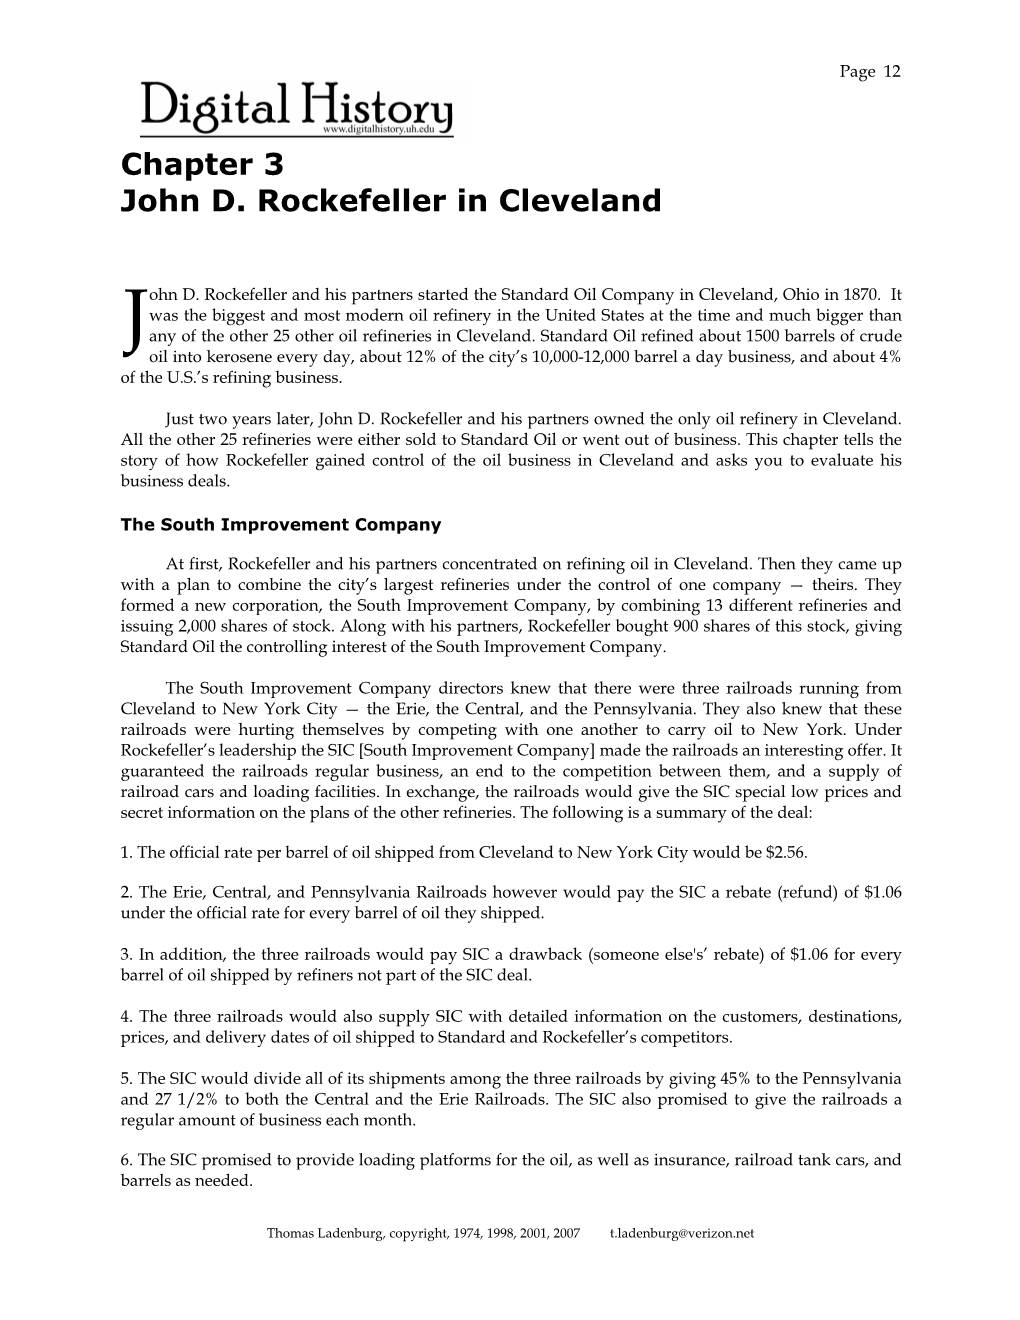 Chapter 3 John D. Rockefeller in Cleveland